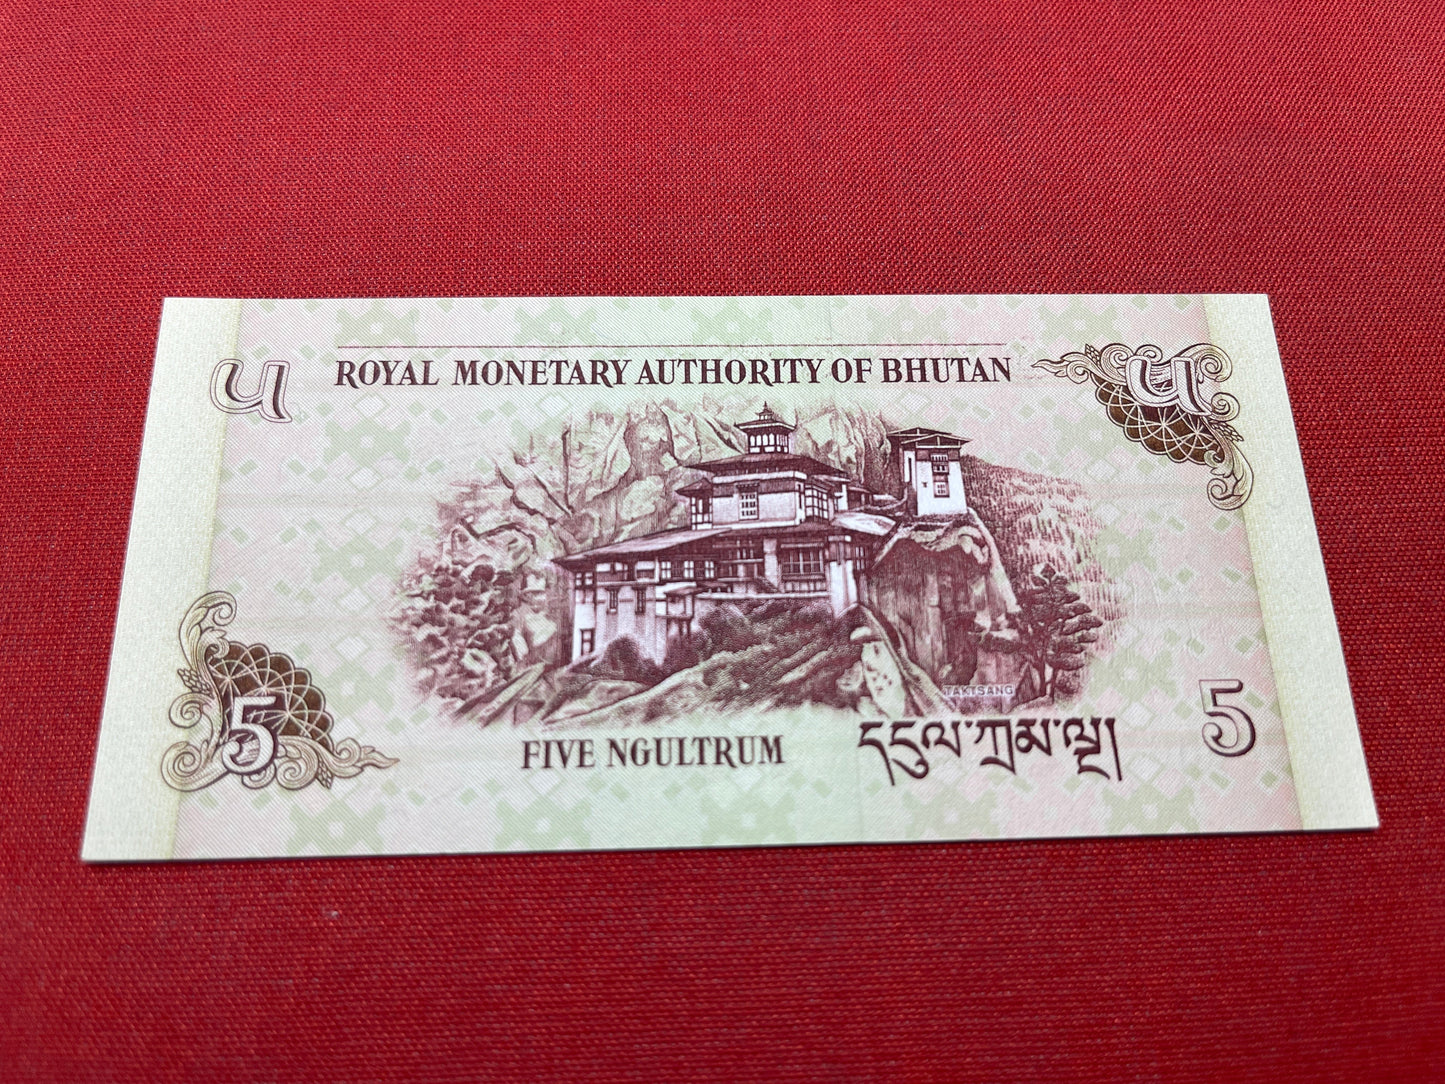 Royal Monetary Authority of Bhutan 5 Ngultrum